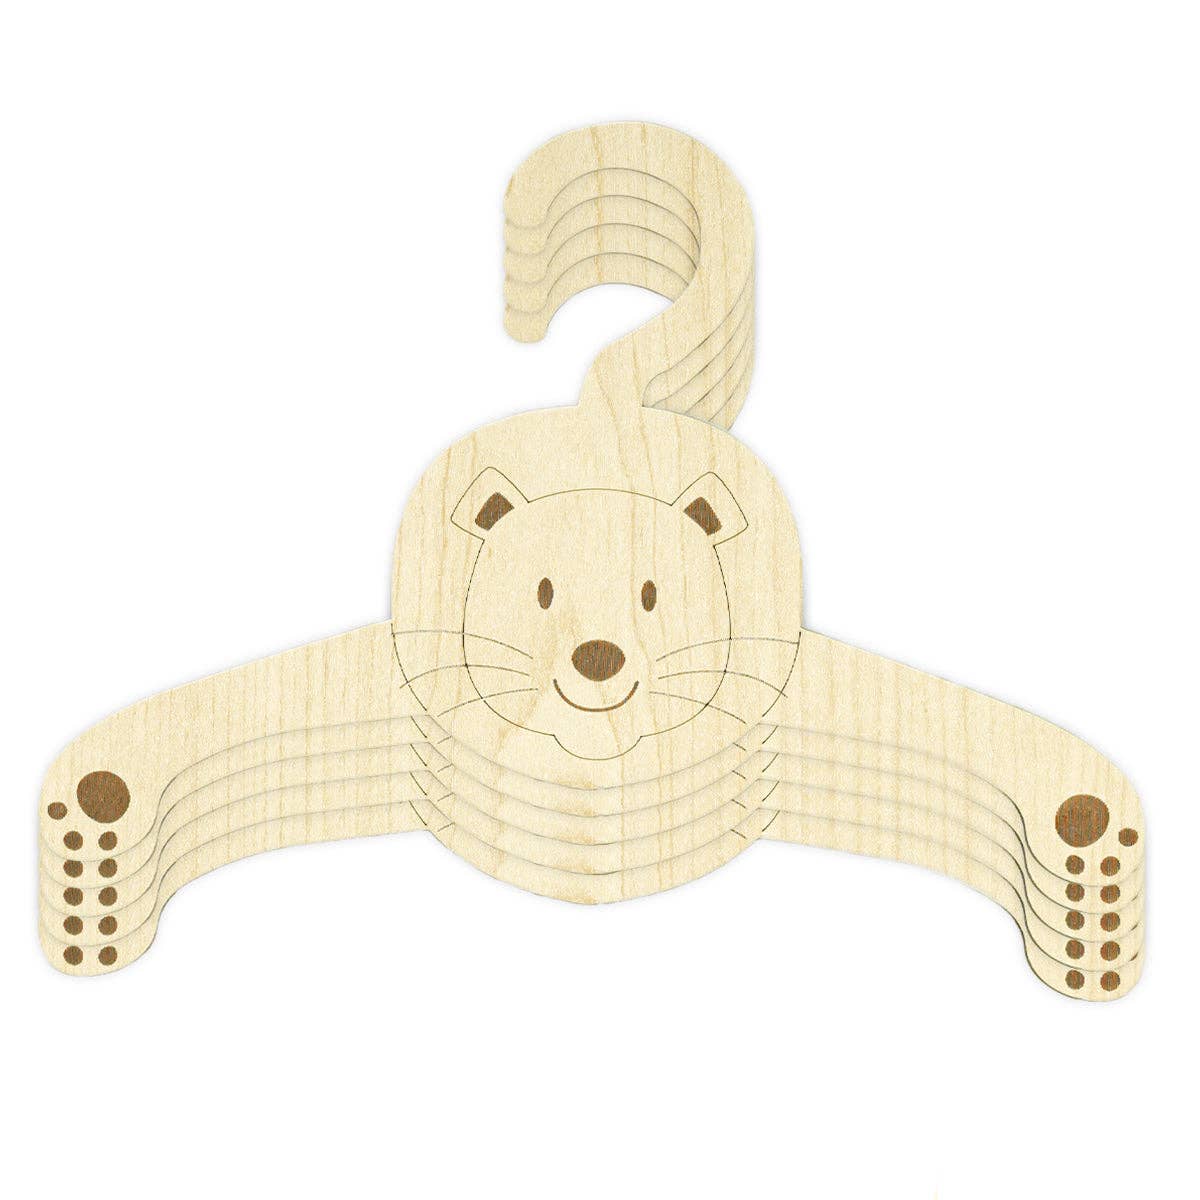 EnjoyMyDesign - Wooden Animal Baby Hangers, Wooden Baby Closet Hangers - Bear / 35 Pcs